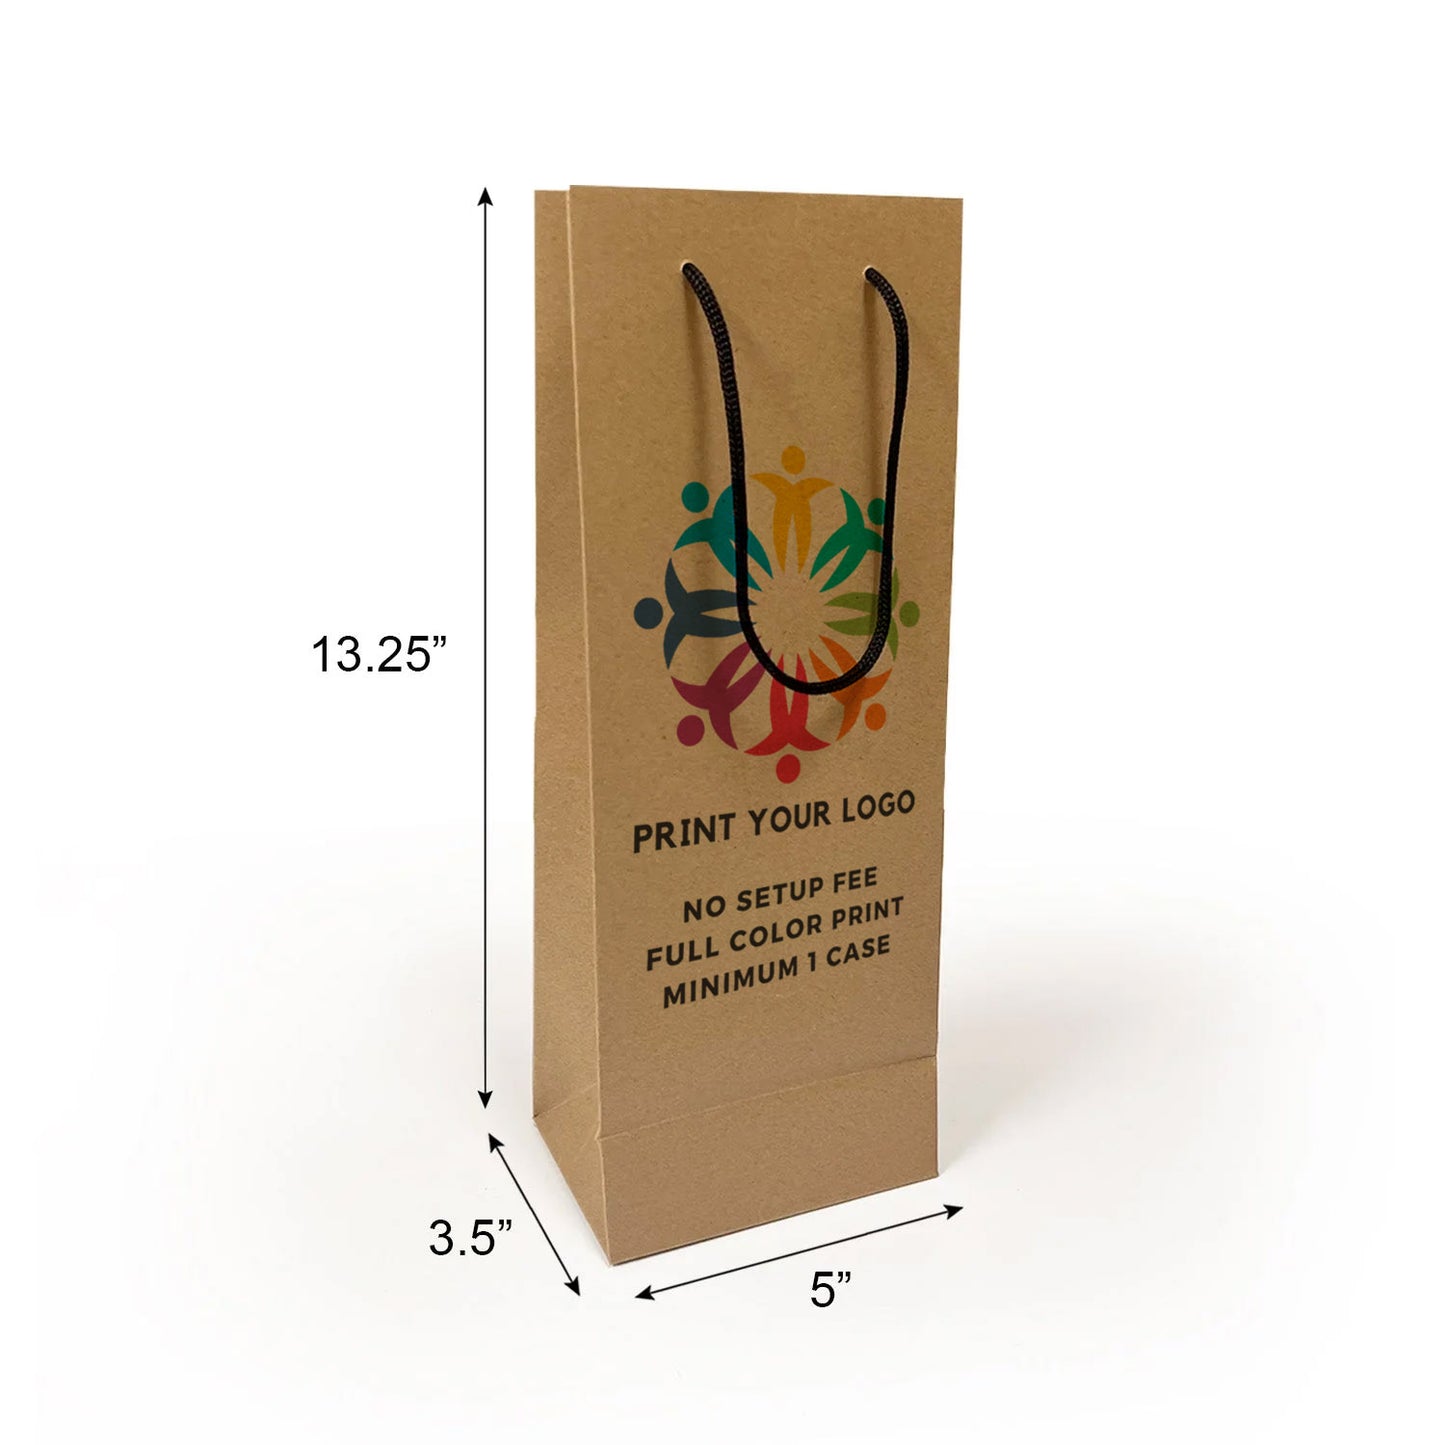 150pcs, Euro Tote Wine 5x3.5x13.25 inches Kraft Paper Bags Rope Handles; Full Color Custom Print, Printed in Canada